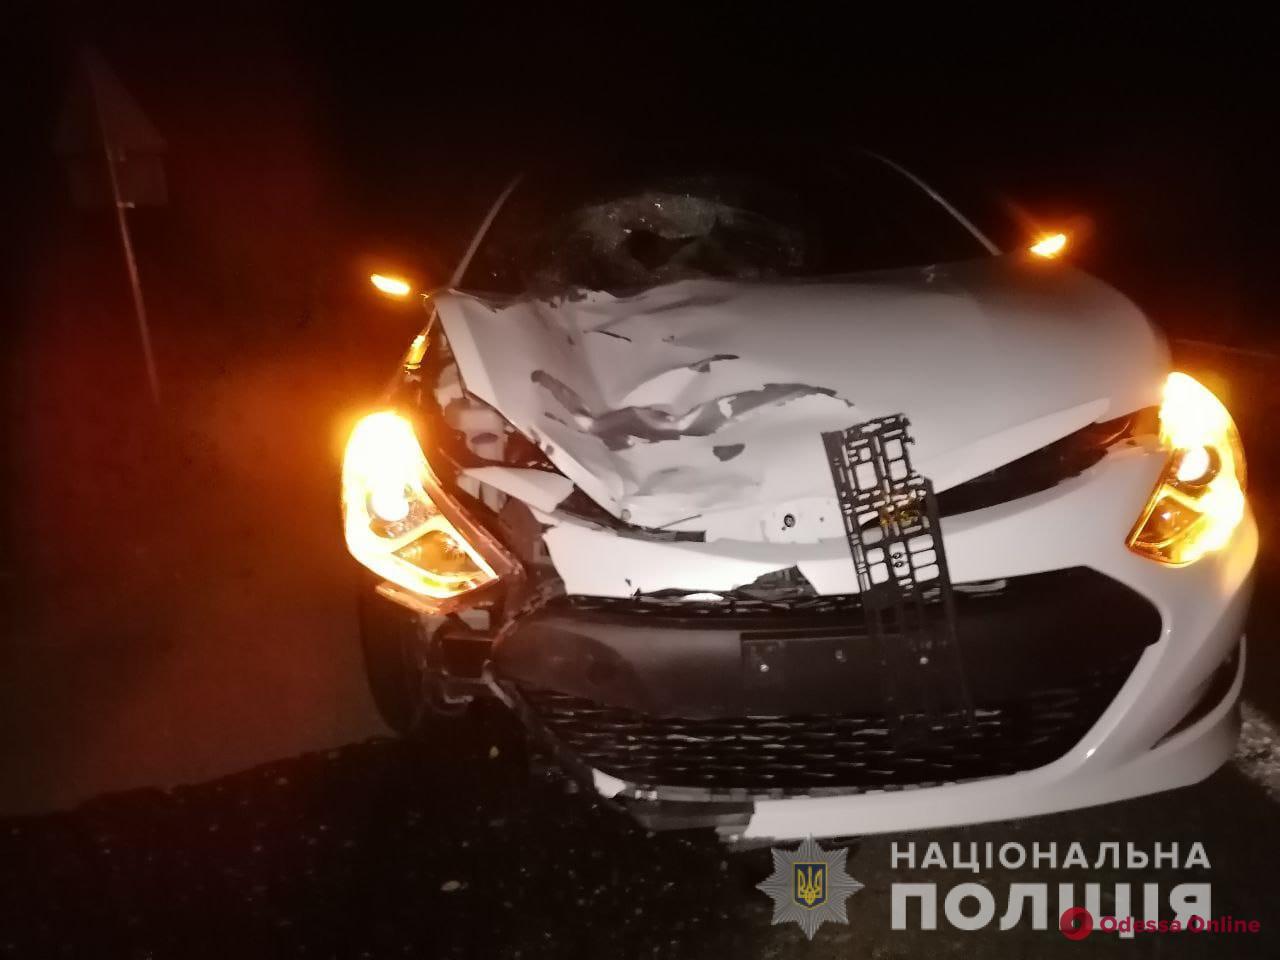 На трассе Одесса – Киев под колесами автомобиля Hyundai погиб пешеход